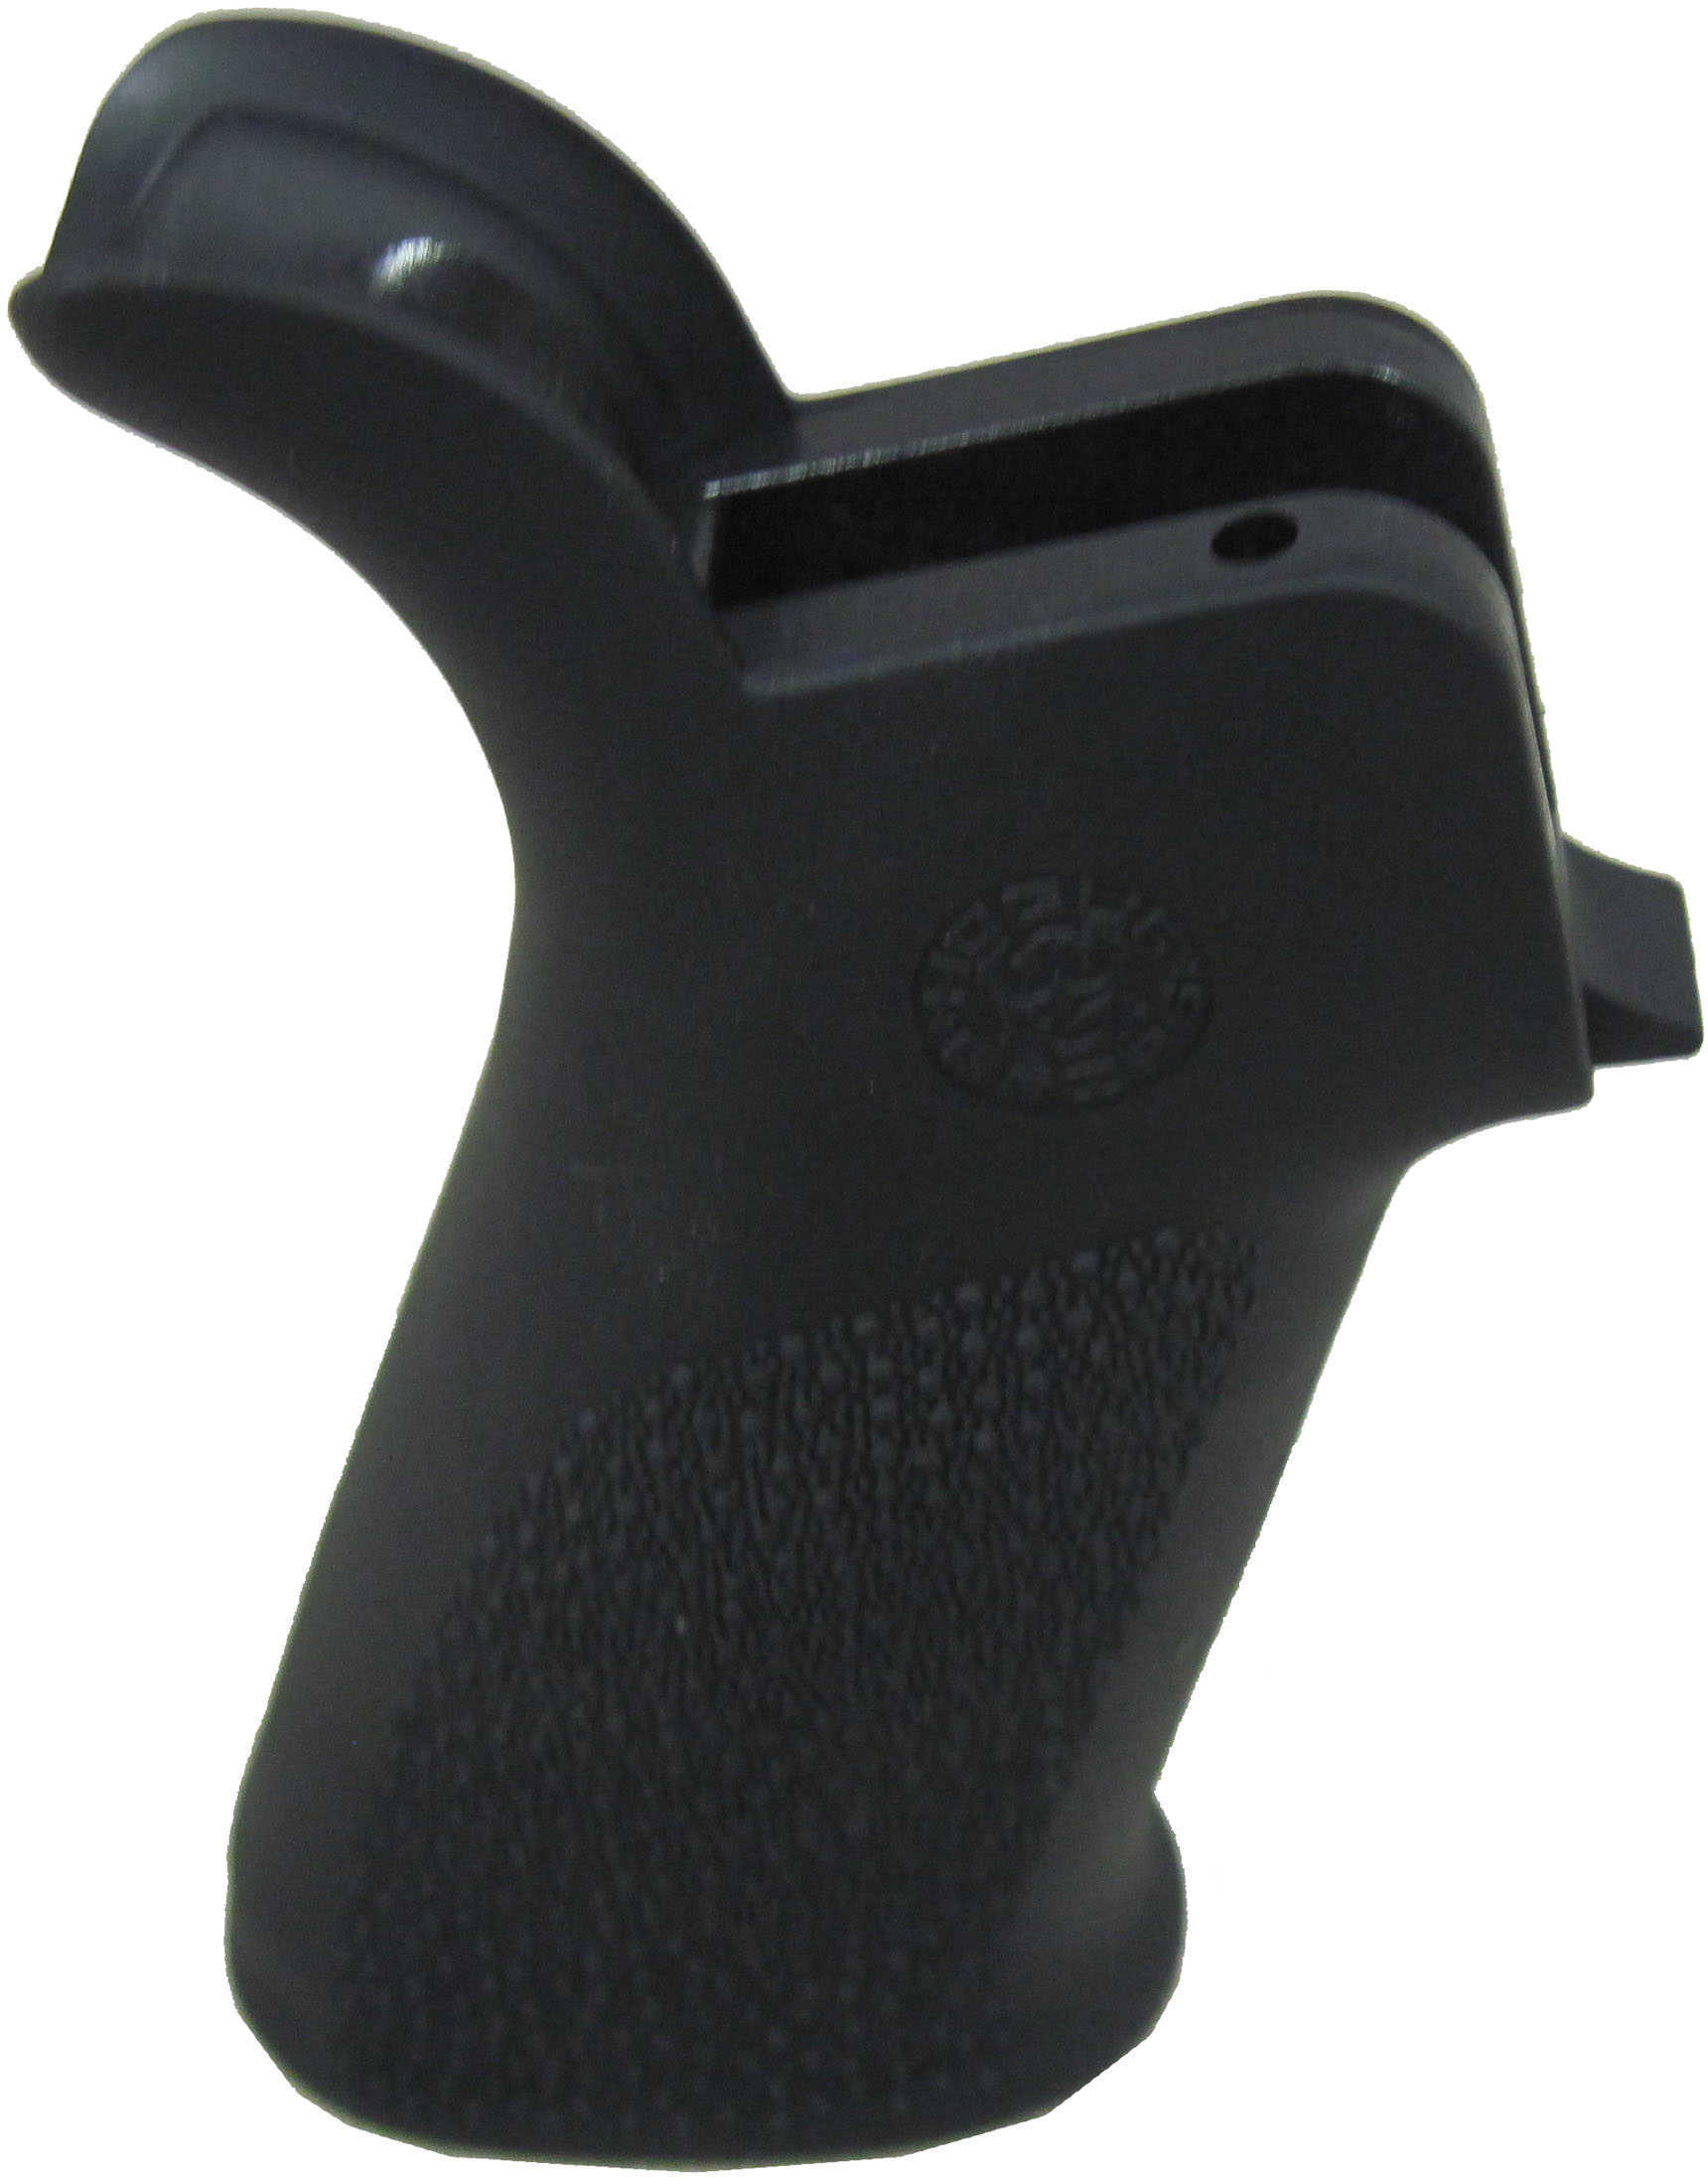 Hogue Grips Beavertail AR-15/M16 Rubber NO Finger Grooves Black 15030